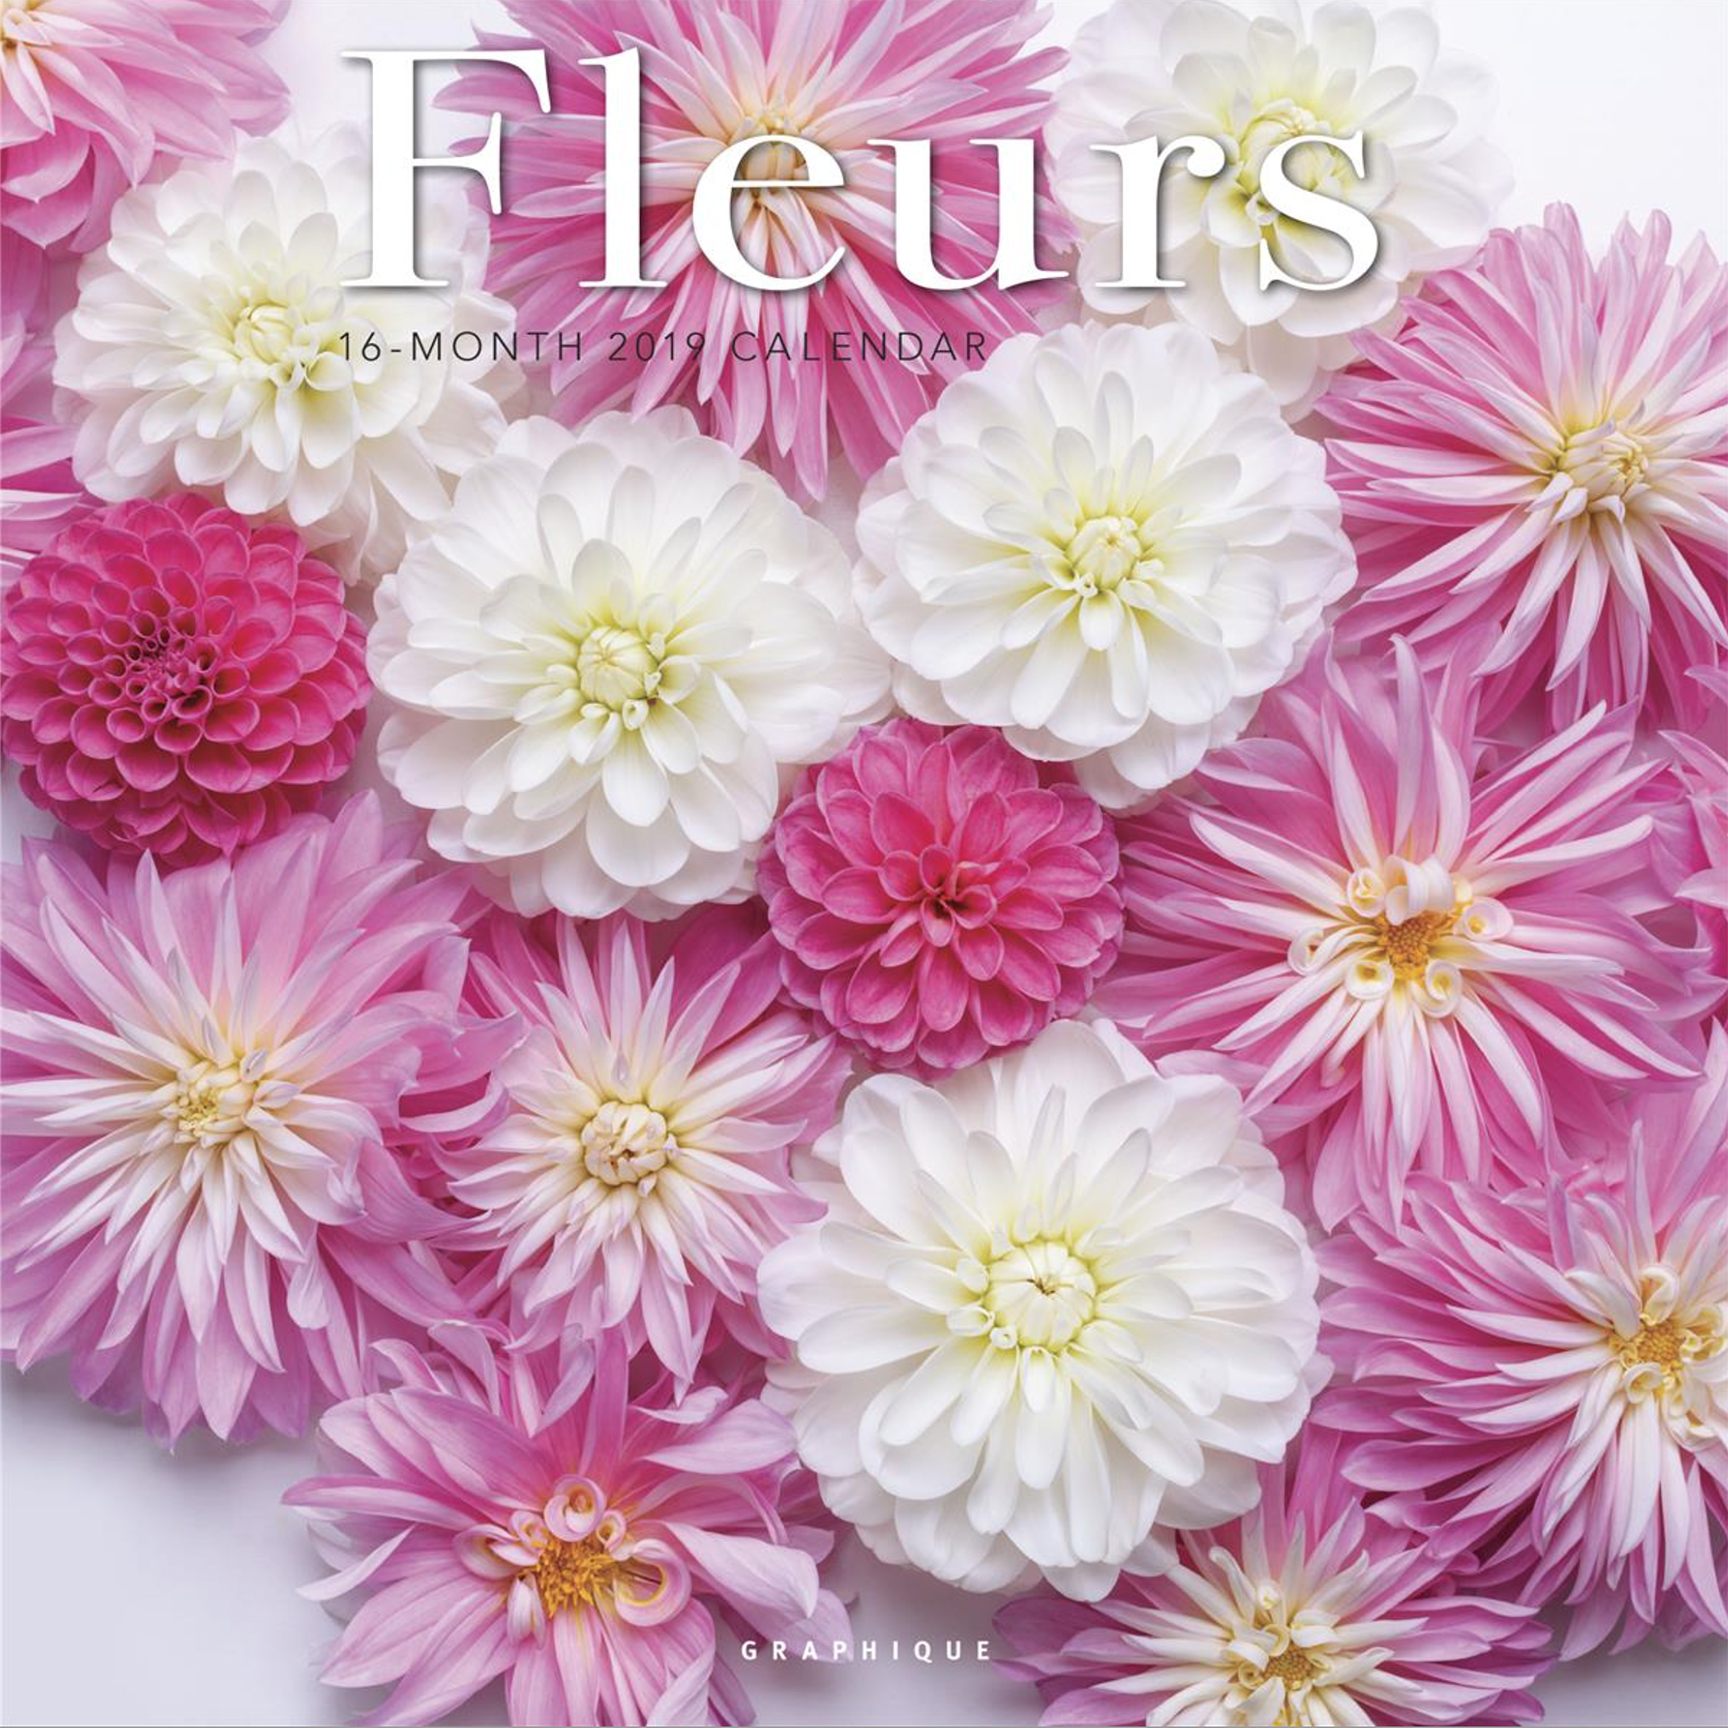 Fleurs 2019 Calendar by Georgianna Lane